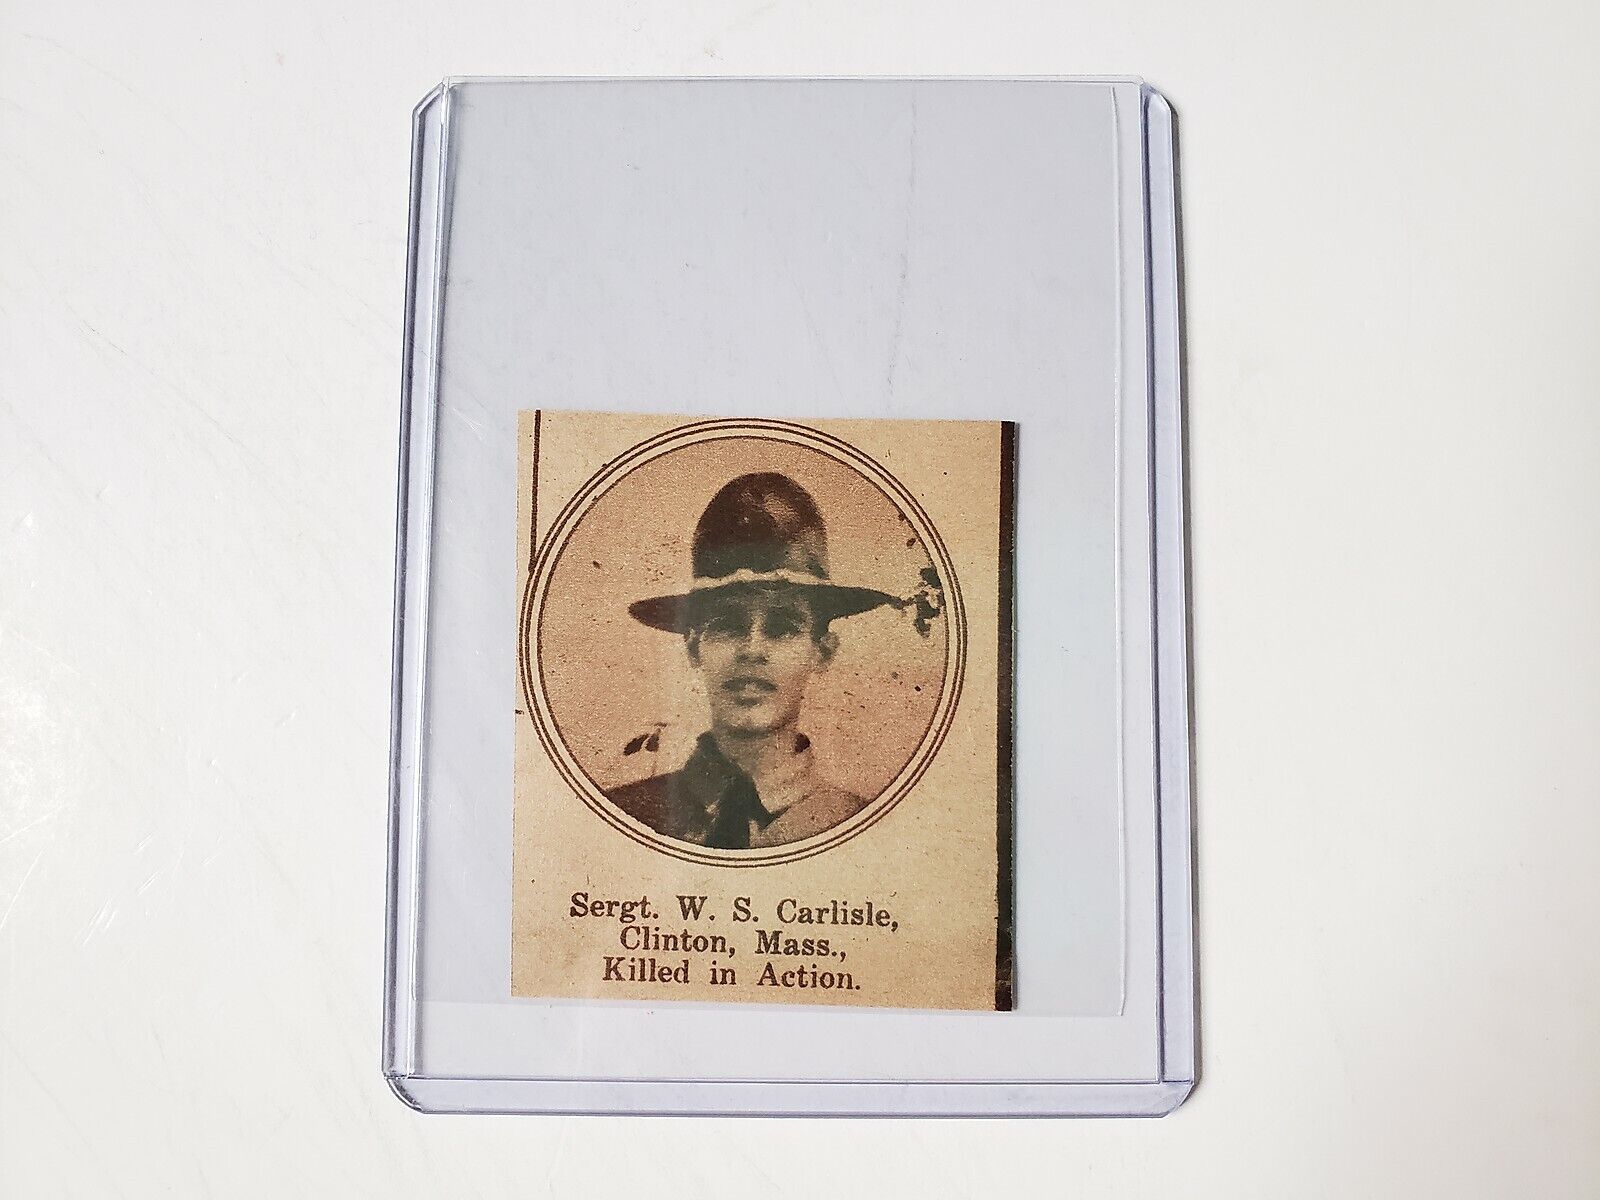 Sergeant W. S. Carlisle Clinton Massachusetts 1919 World War 1 WW1 Hero